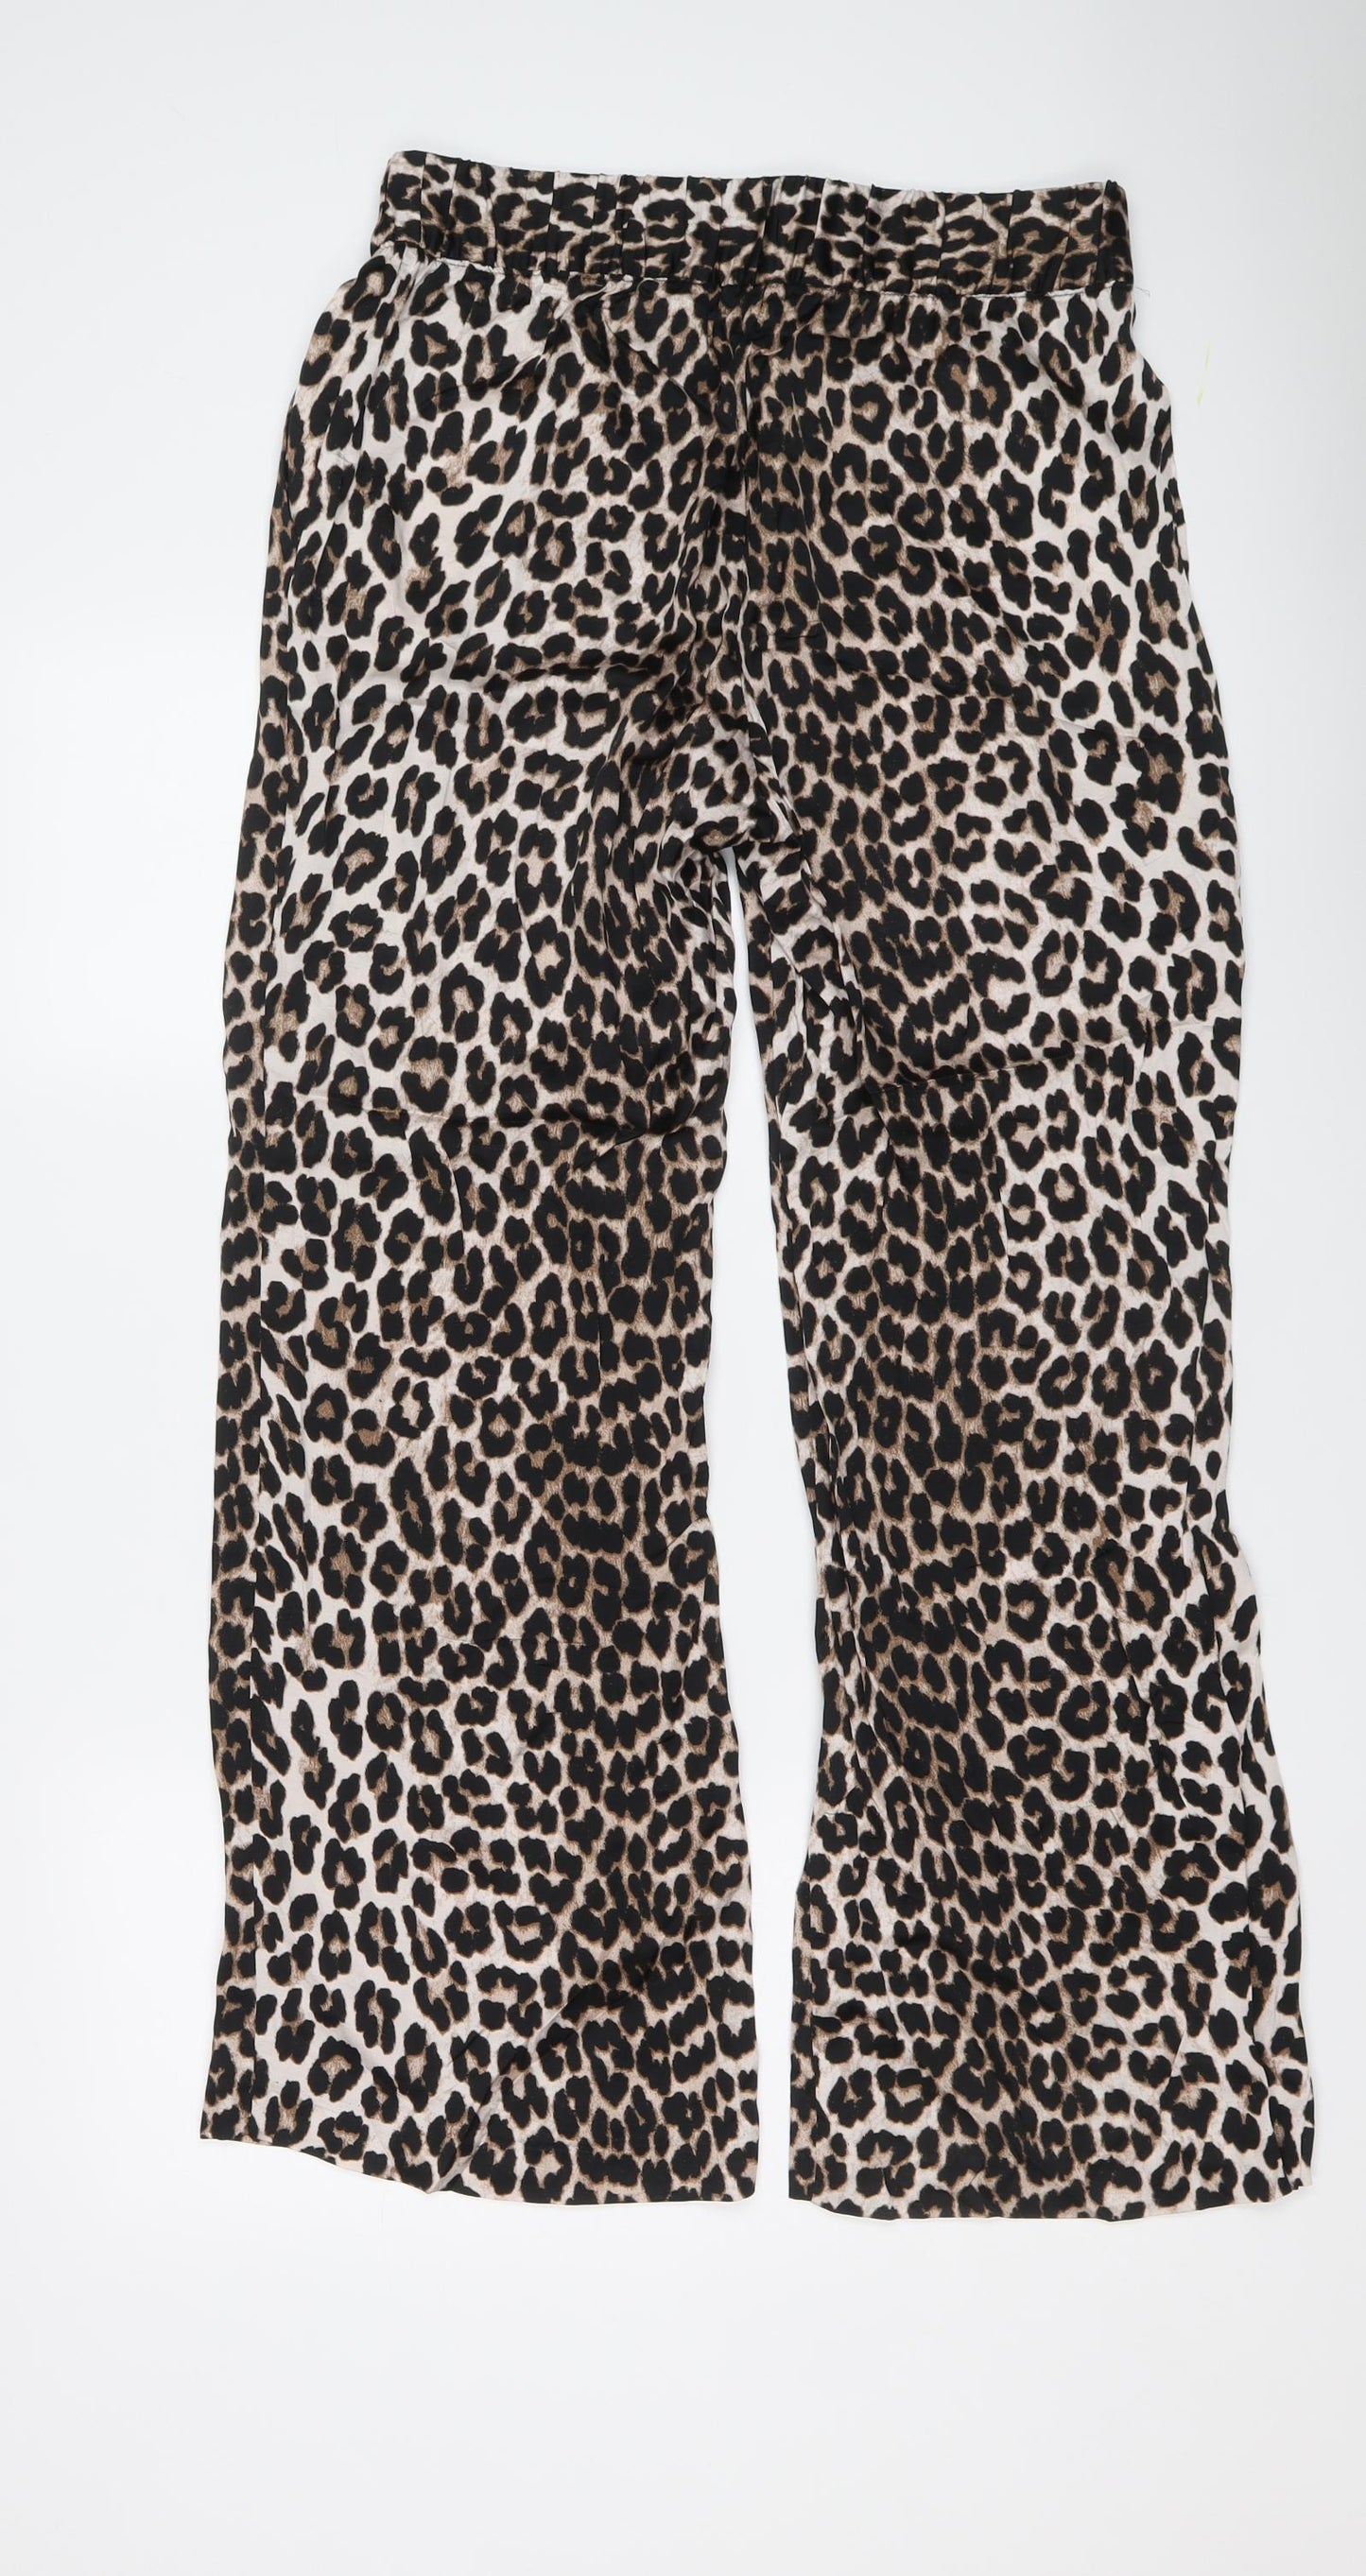 H&M Womens Brown Animal Print Viscose Trousers Size M L29 in Regular - Leopard Print